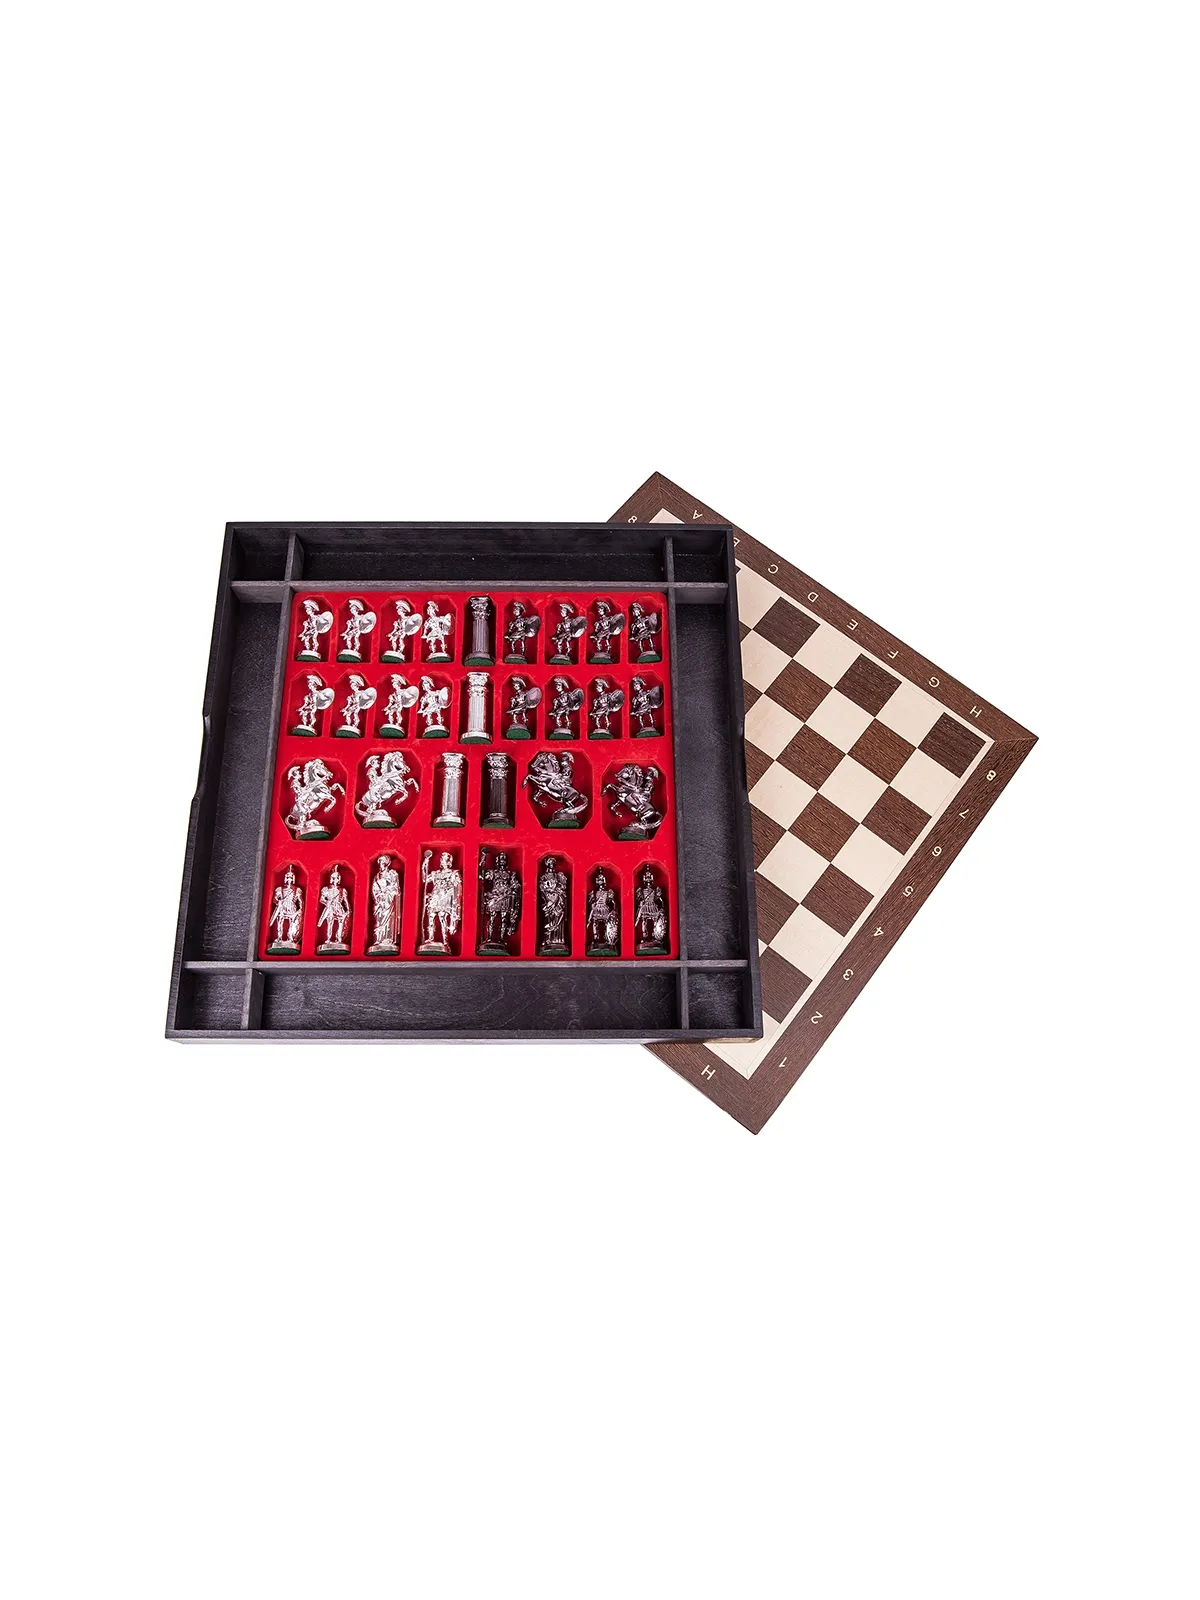 Schach Rom - Silver Edition SQ